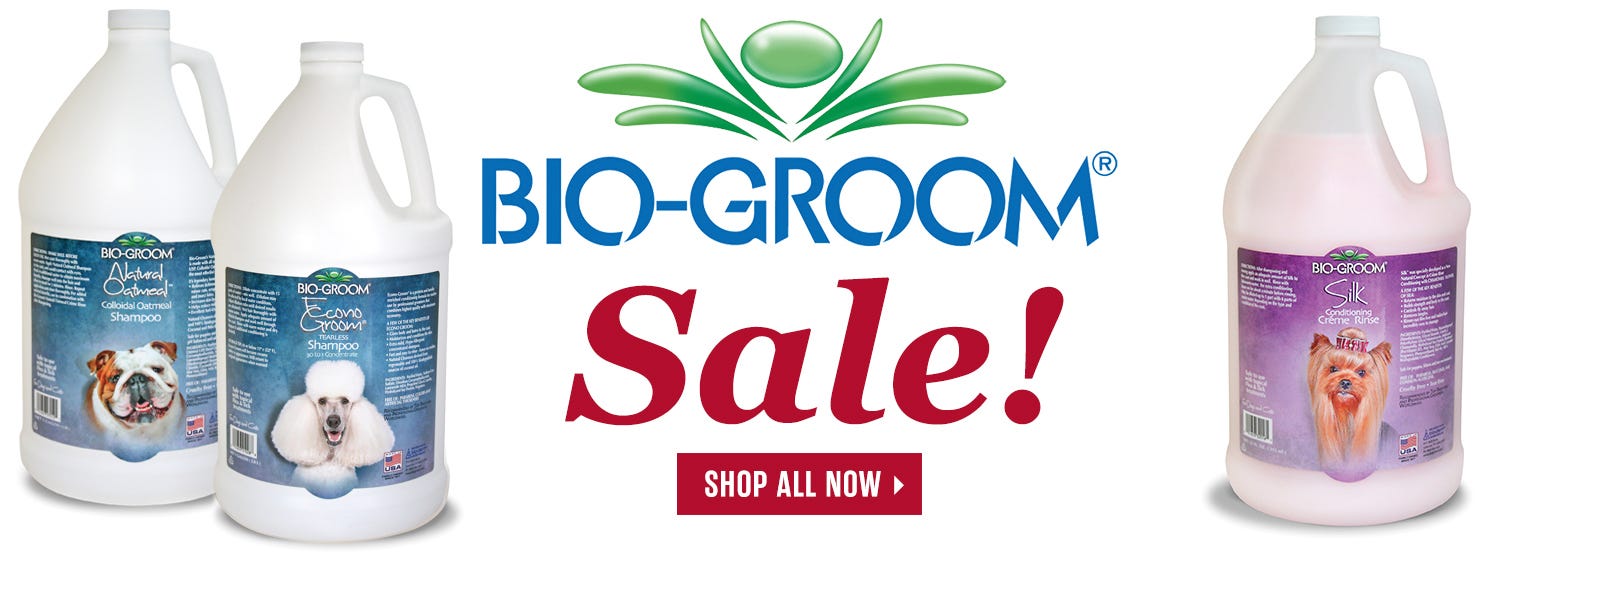 Select Bio-Groom on Sale!